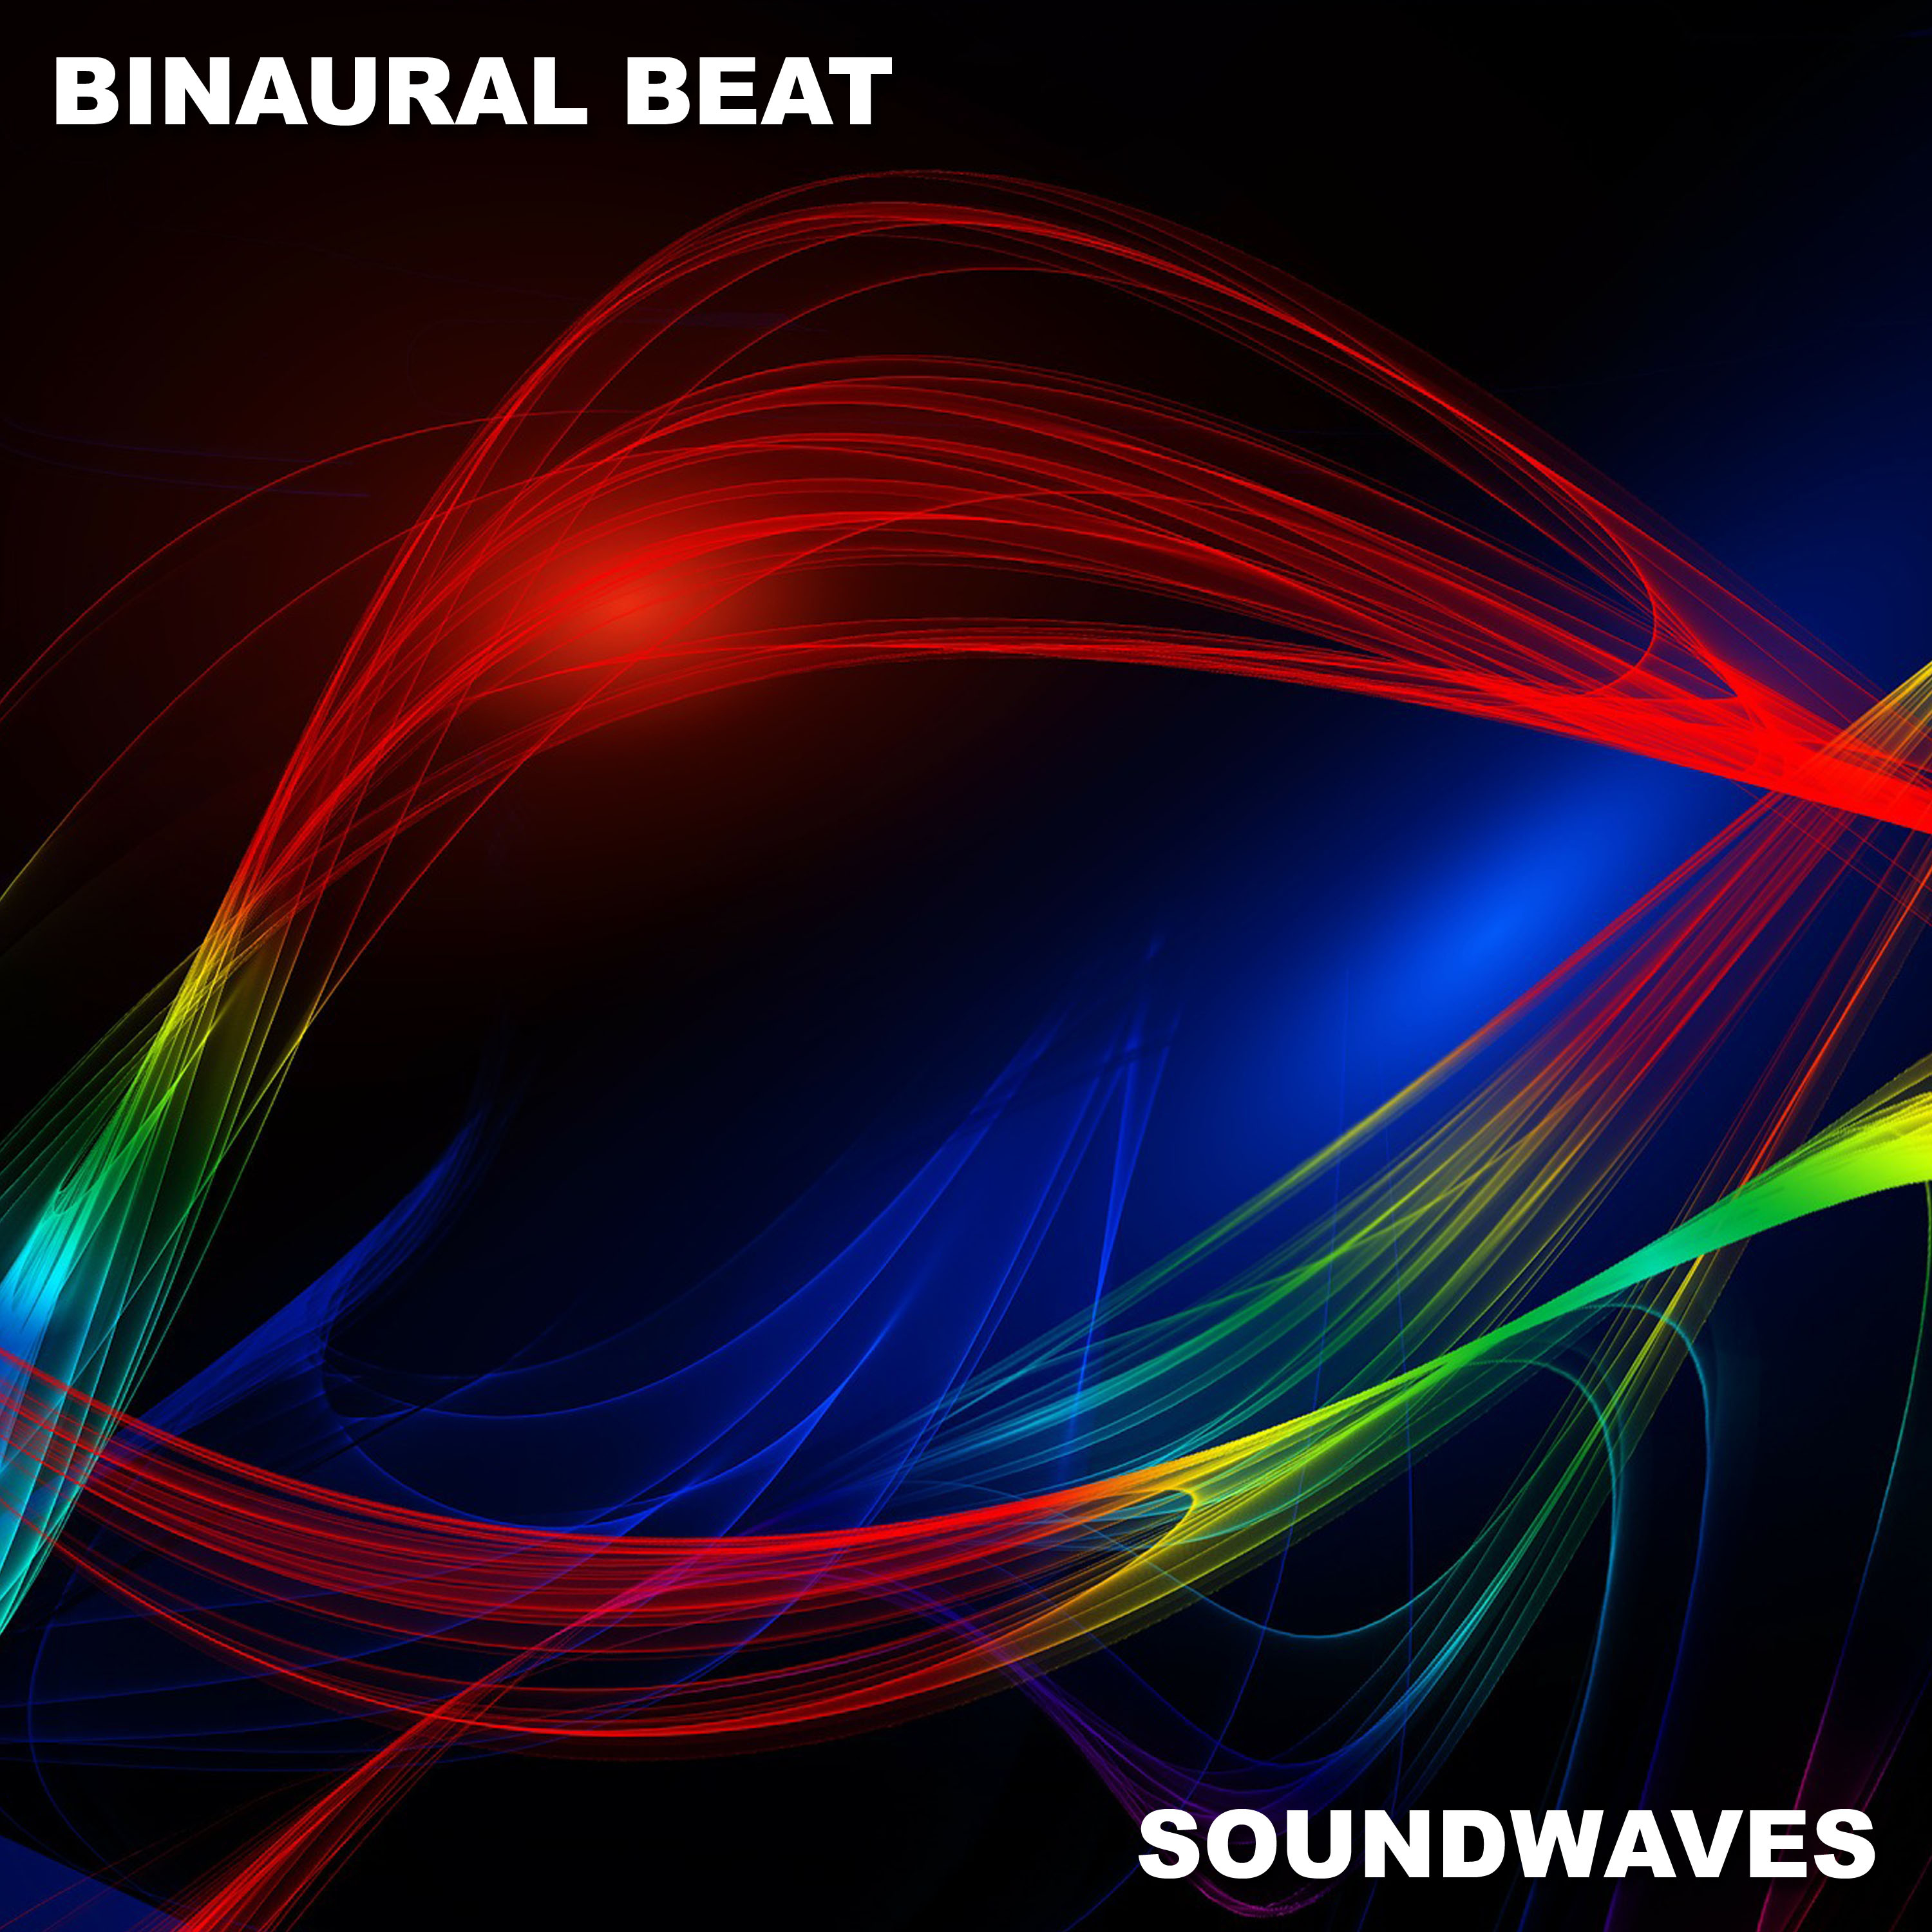 12 Binaural Beats Soundwaves